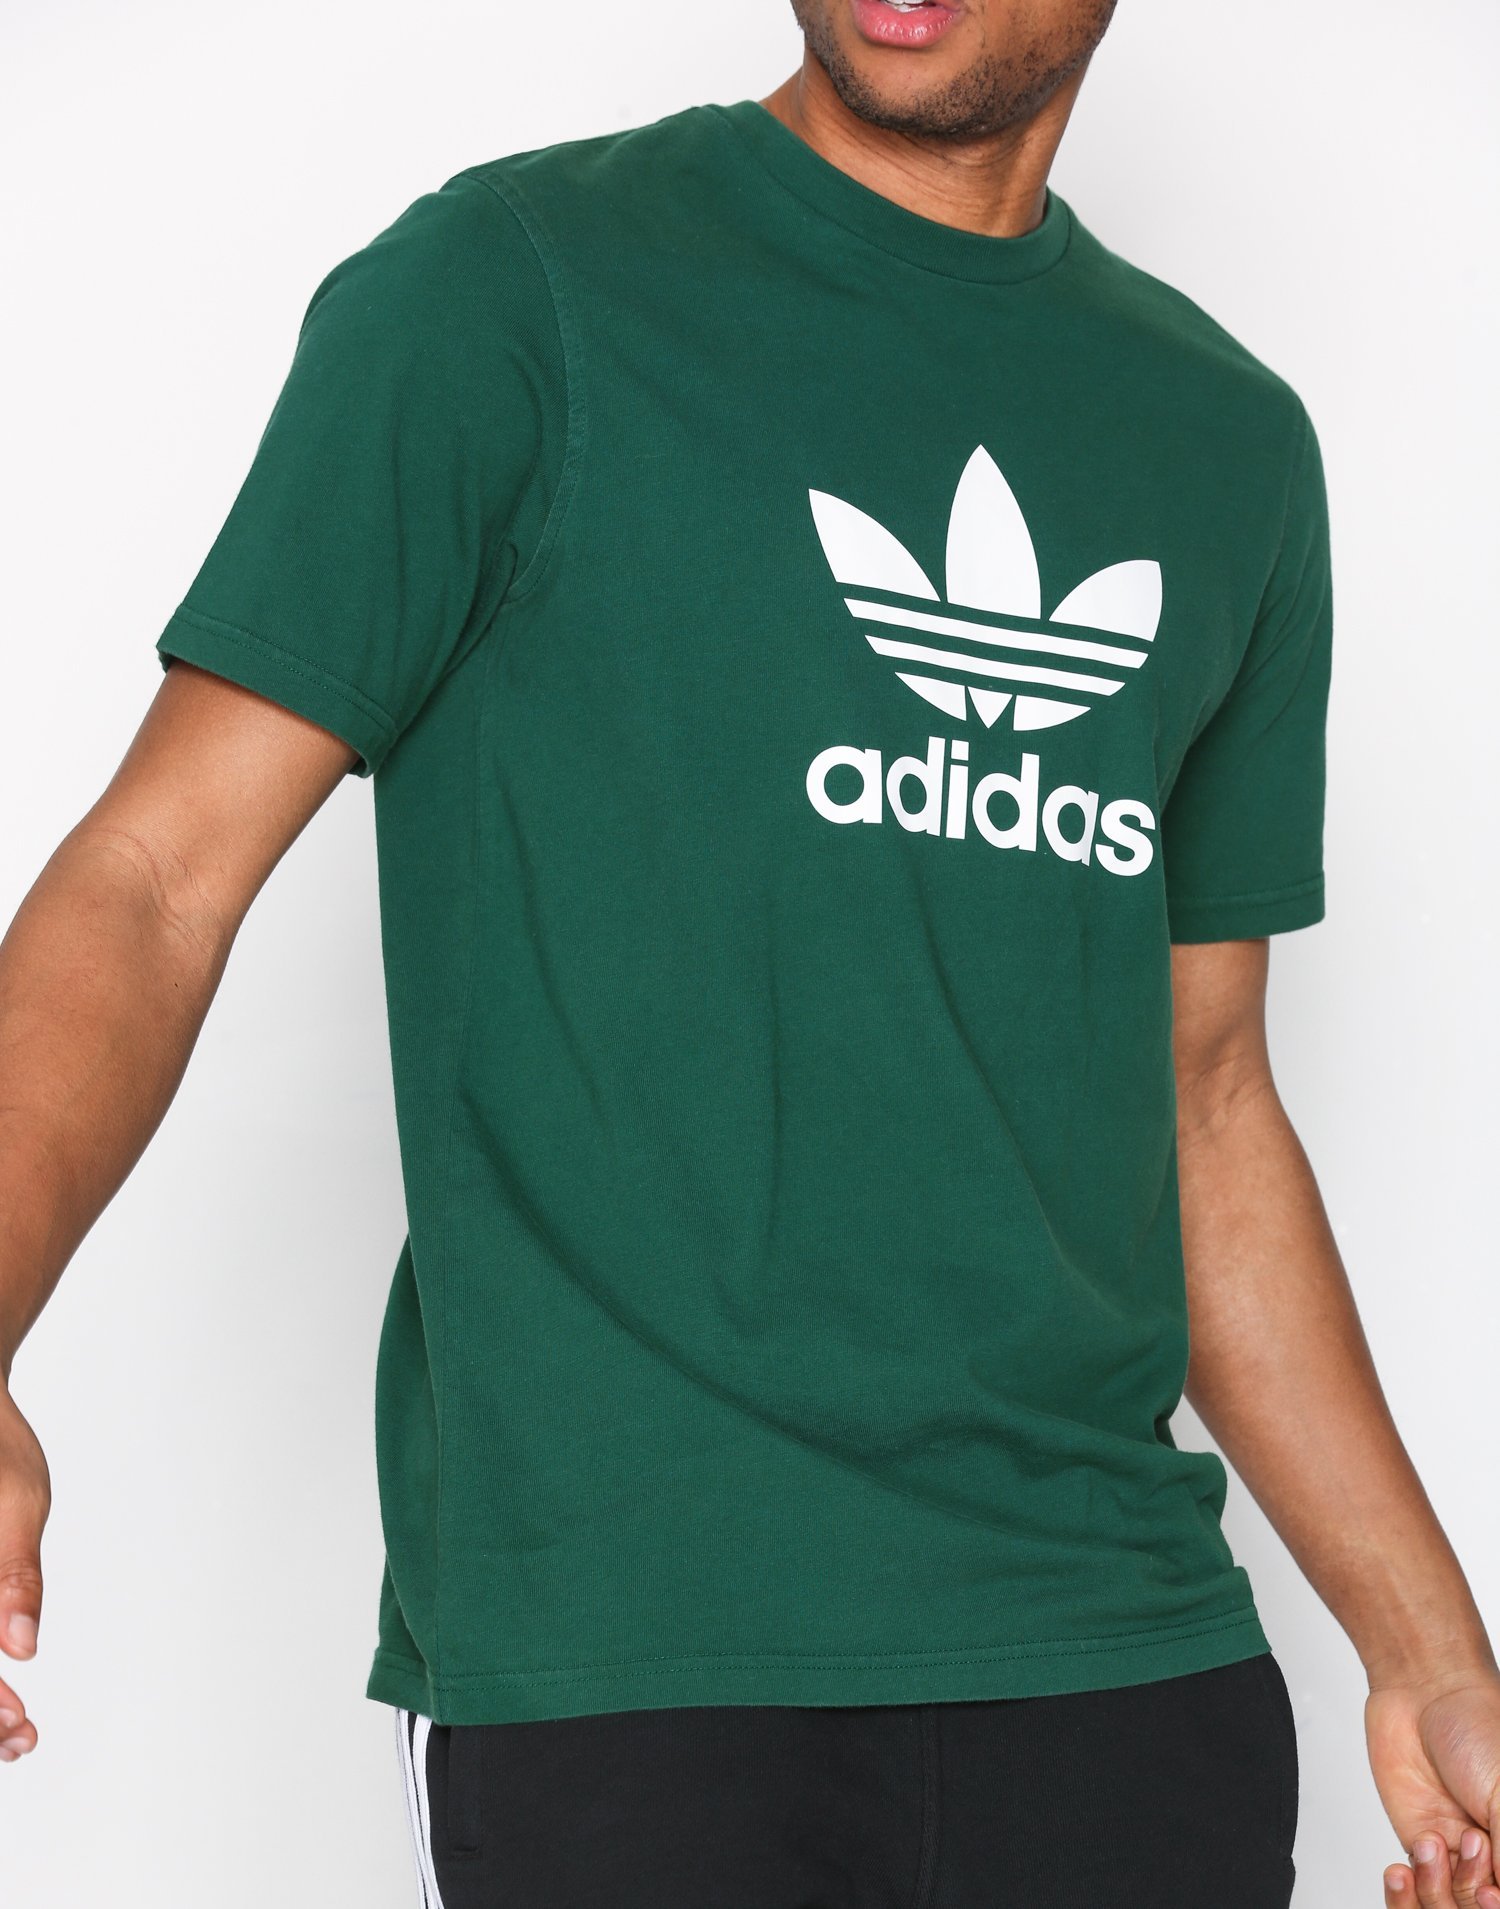 Adidas T Shirt Price In Bangladesh Rldm